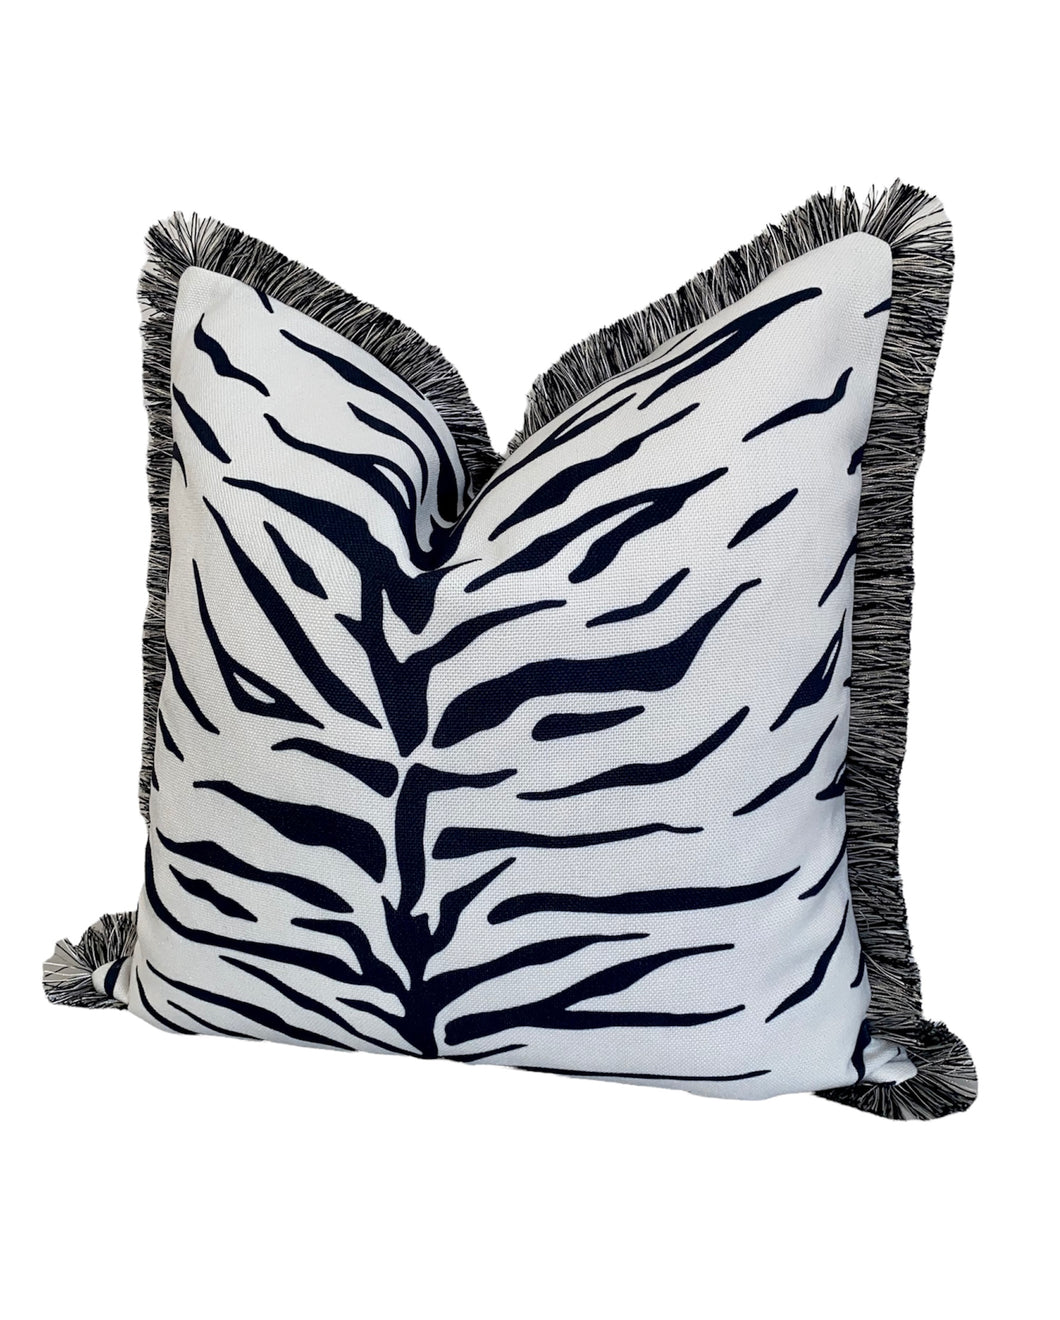 Zebra Cushion Animal Print Bianco Bianco Monocromo Cuscino Nero e Bianco Frangia Semplice Senza Cristalli